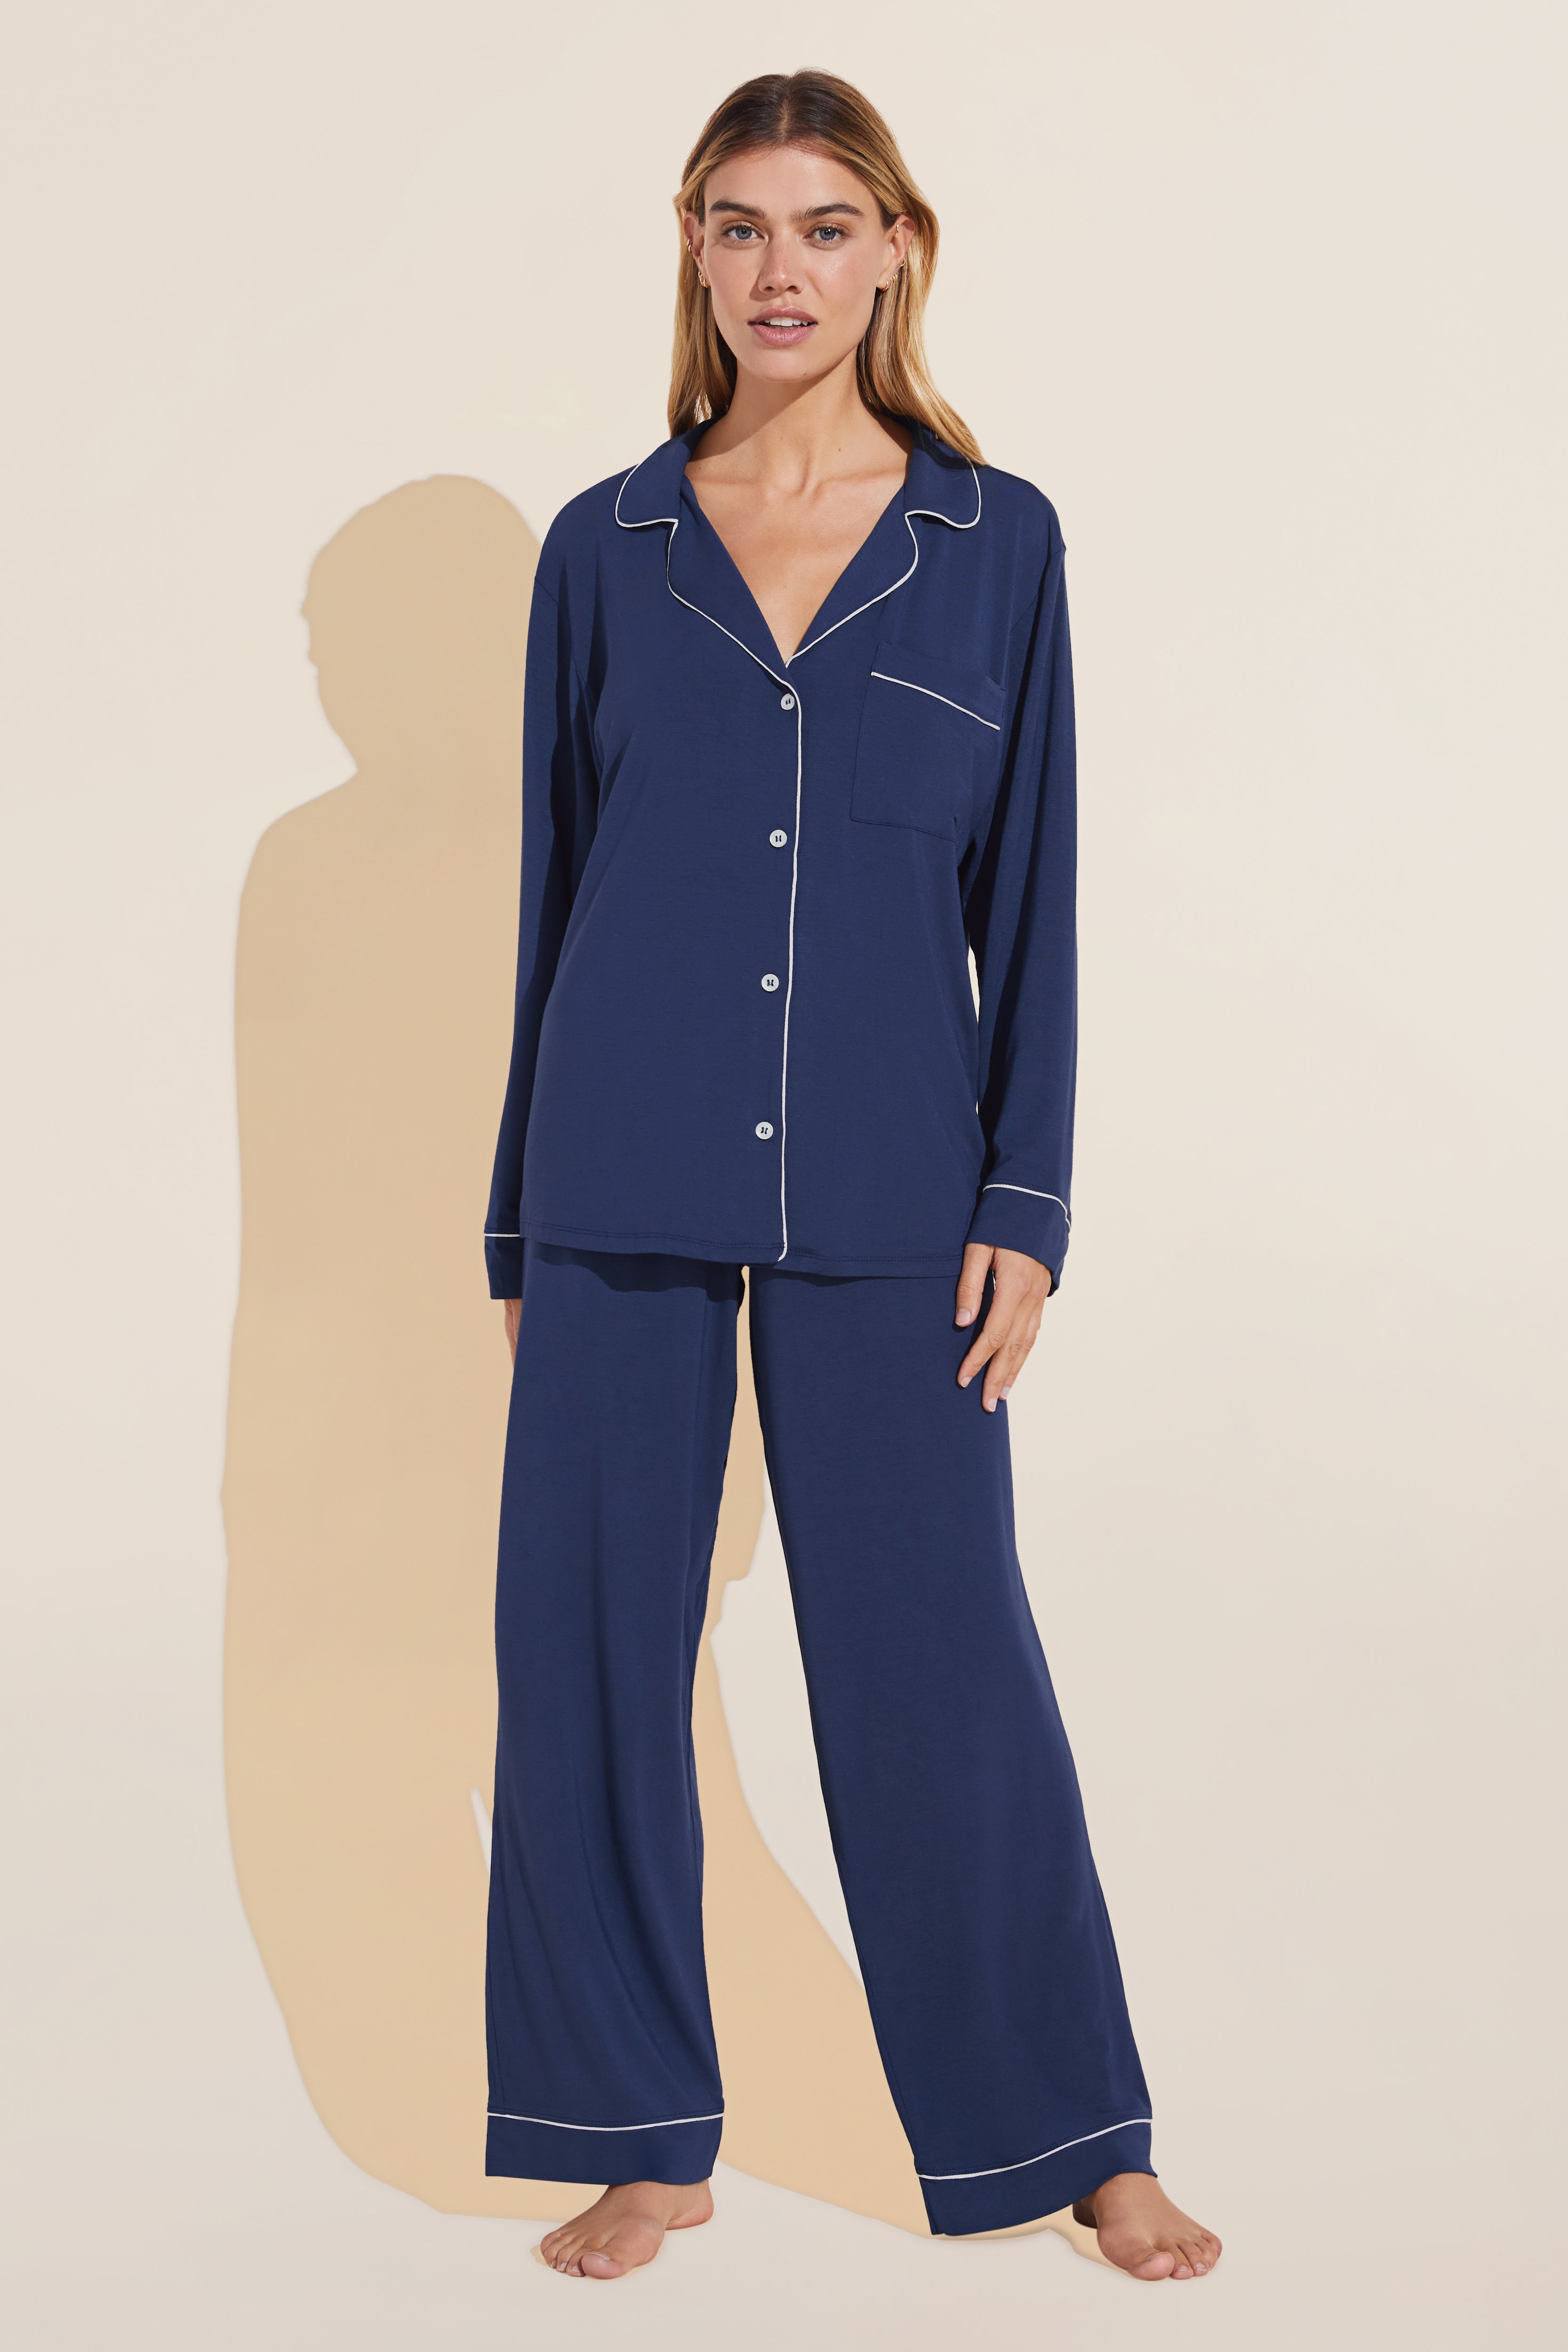 Review, Comfy Pajamas We Love To Live In: Jijamas